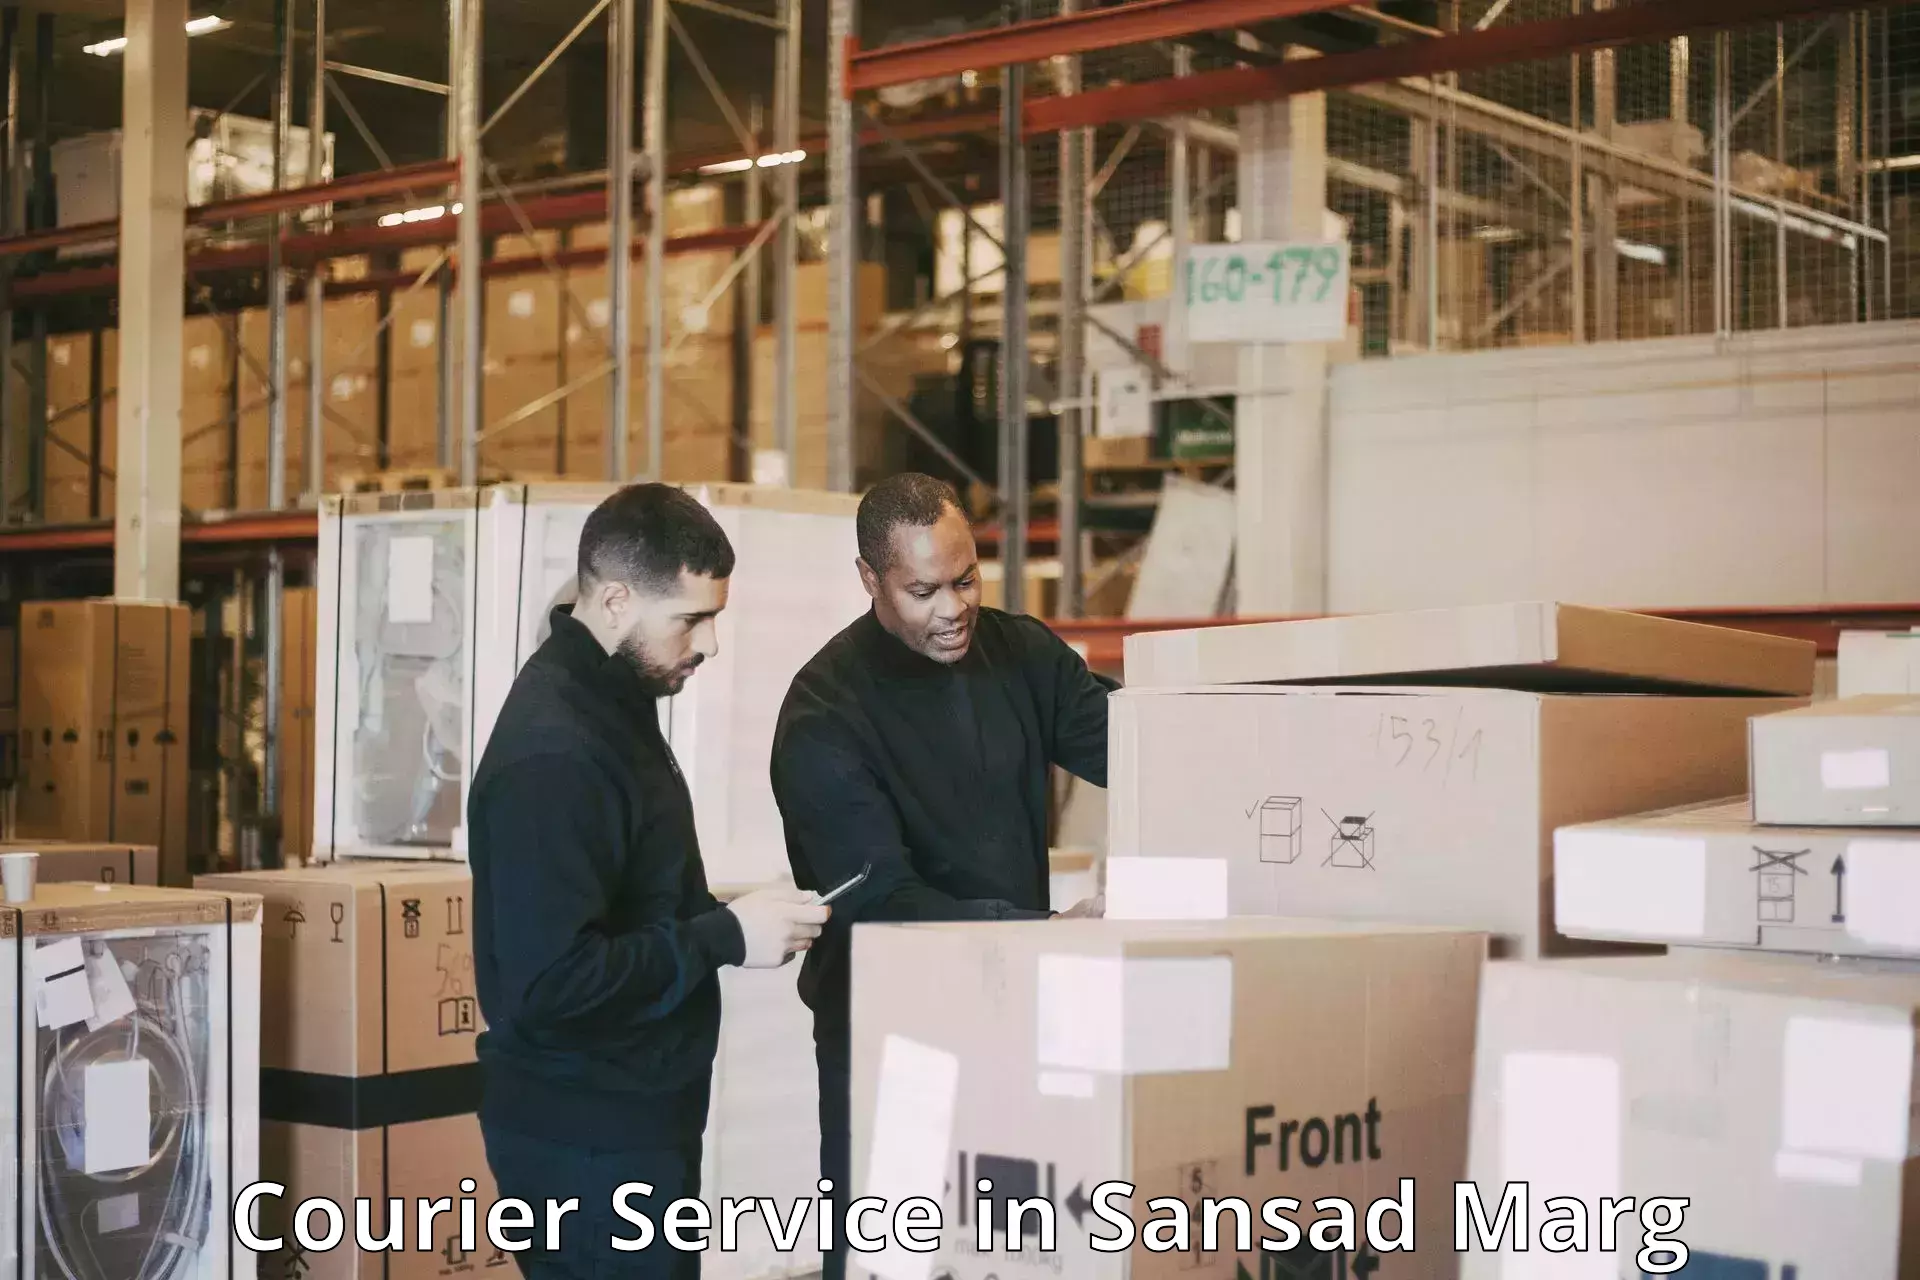 Multi-national courier services in Sansad Marg